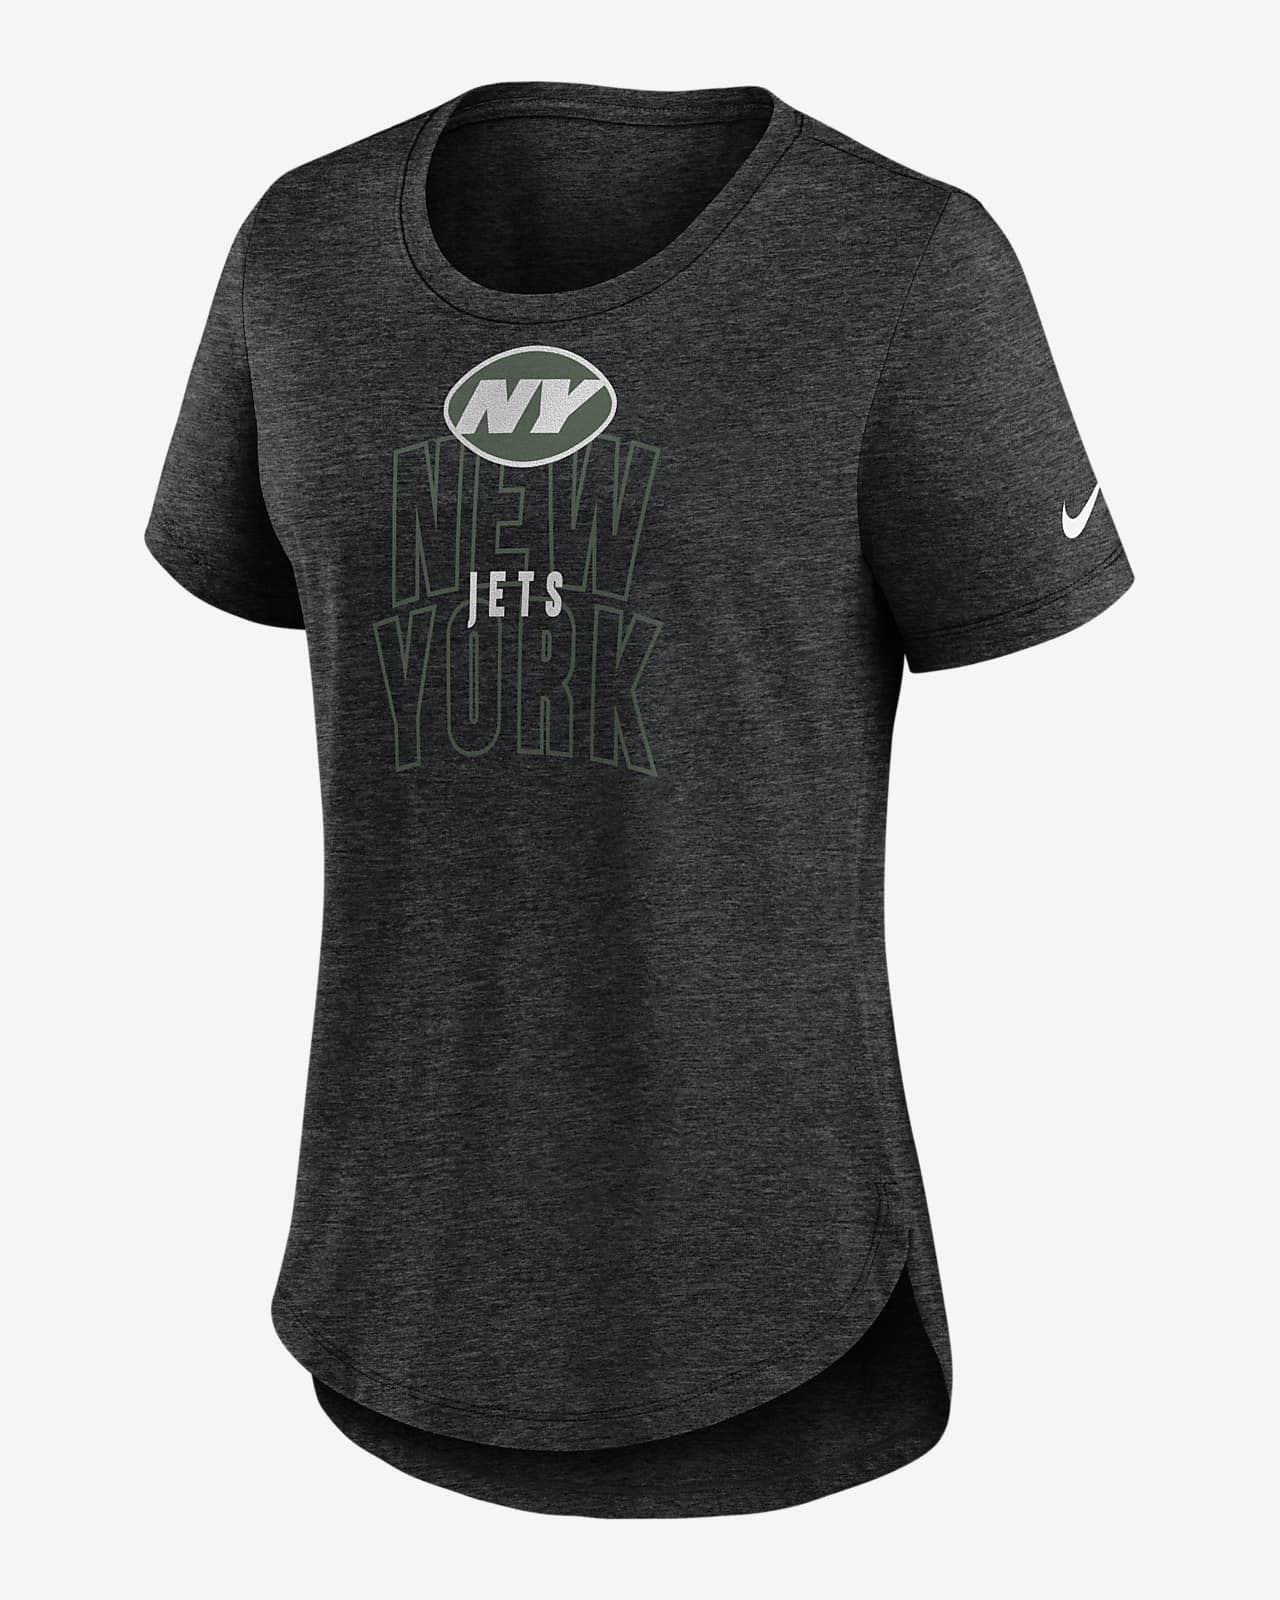 Nike Fashion (NFL New York Jets) Women's T-Shirt.